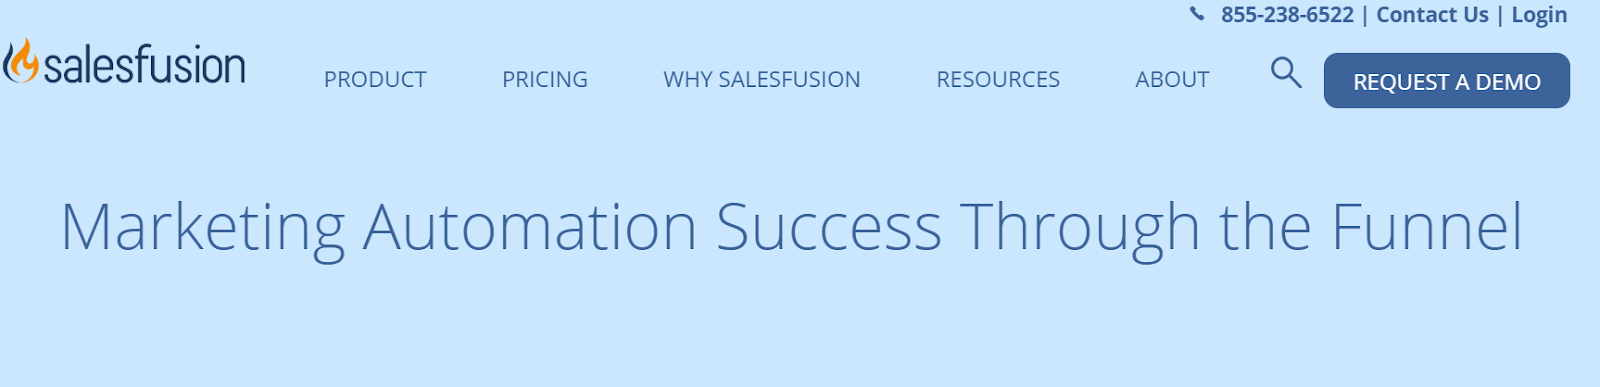 Salesfusion Marketing Automation Software